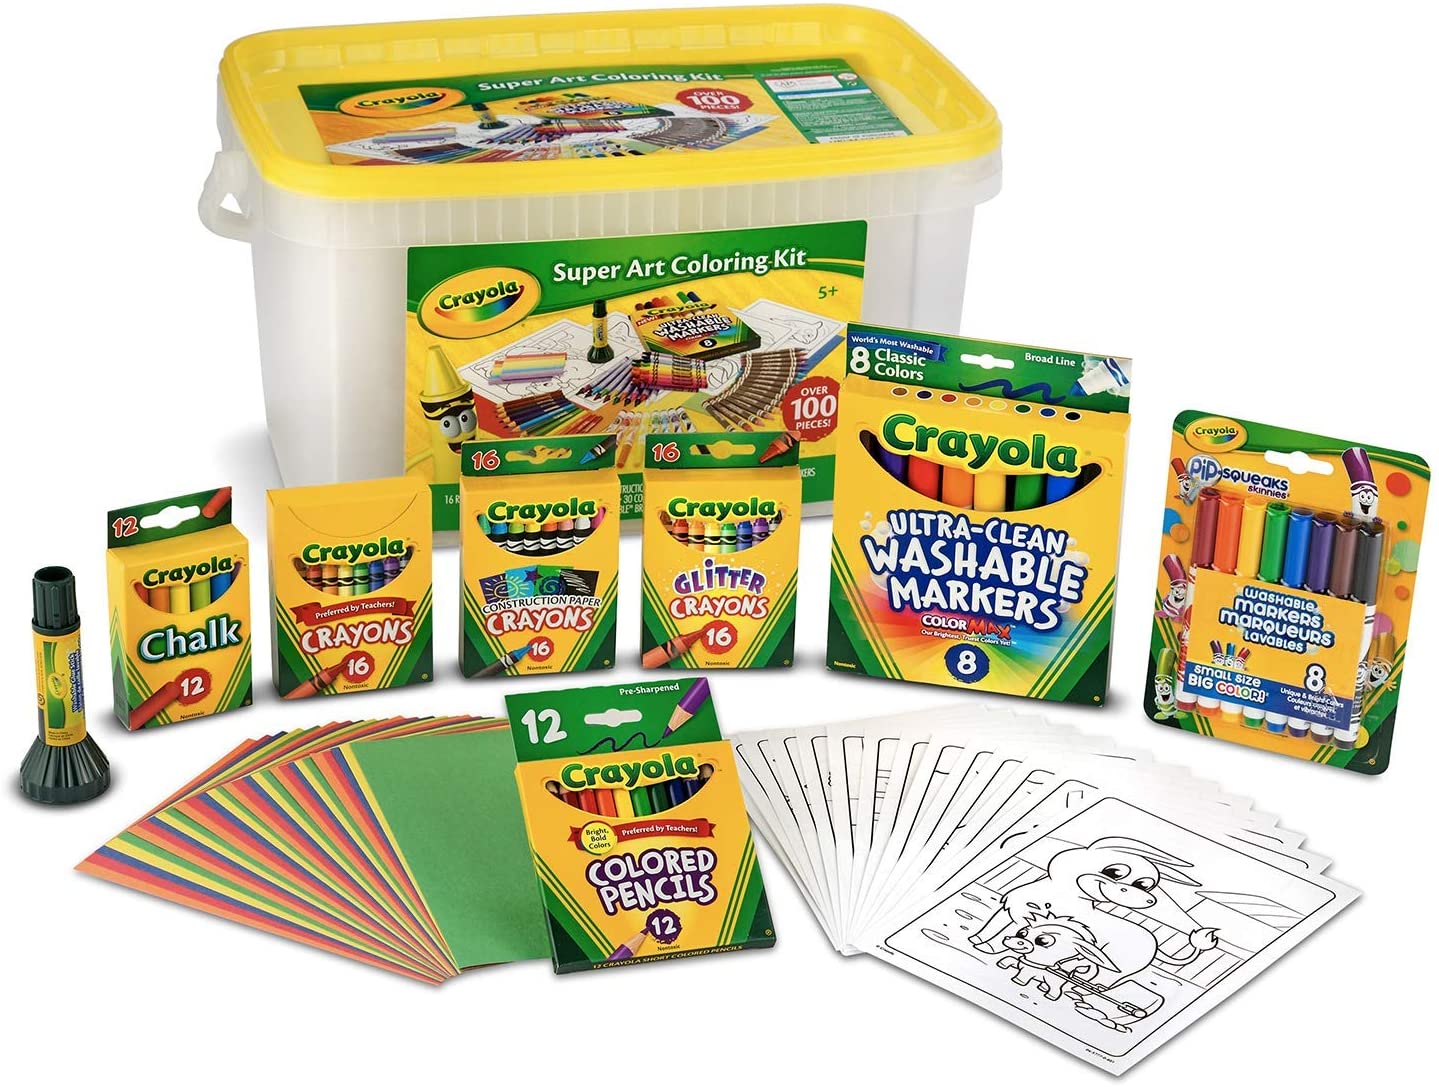 https://www.dontwasteyourmoney.com/wp-content/uploads/2020/07/crayola-super-art-suply-coloring-kit-for-kids-100-piece-art-supplies-for-kids.jpg